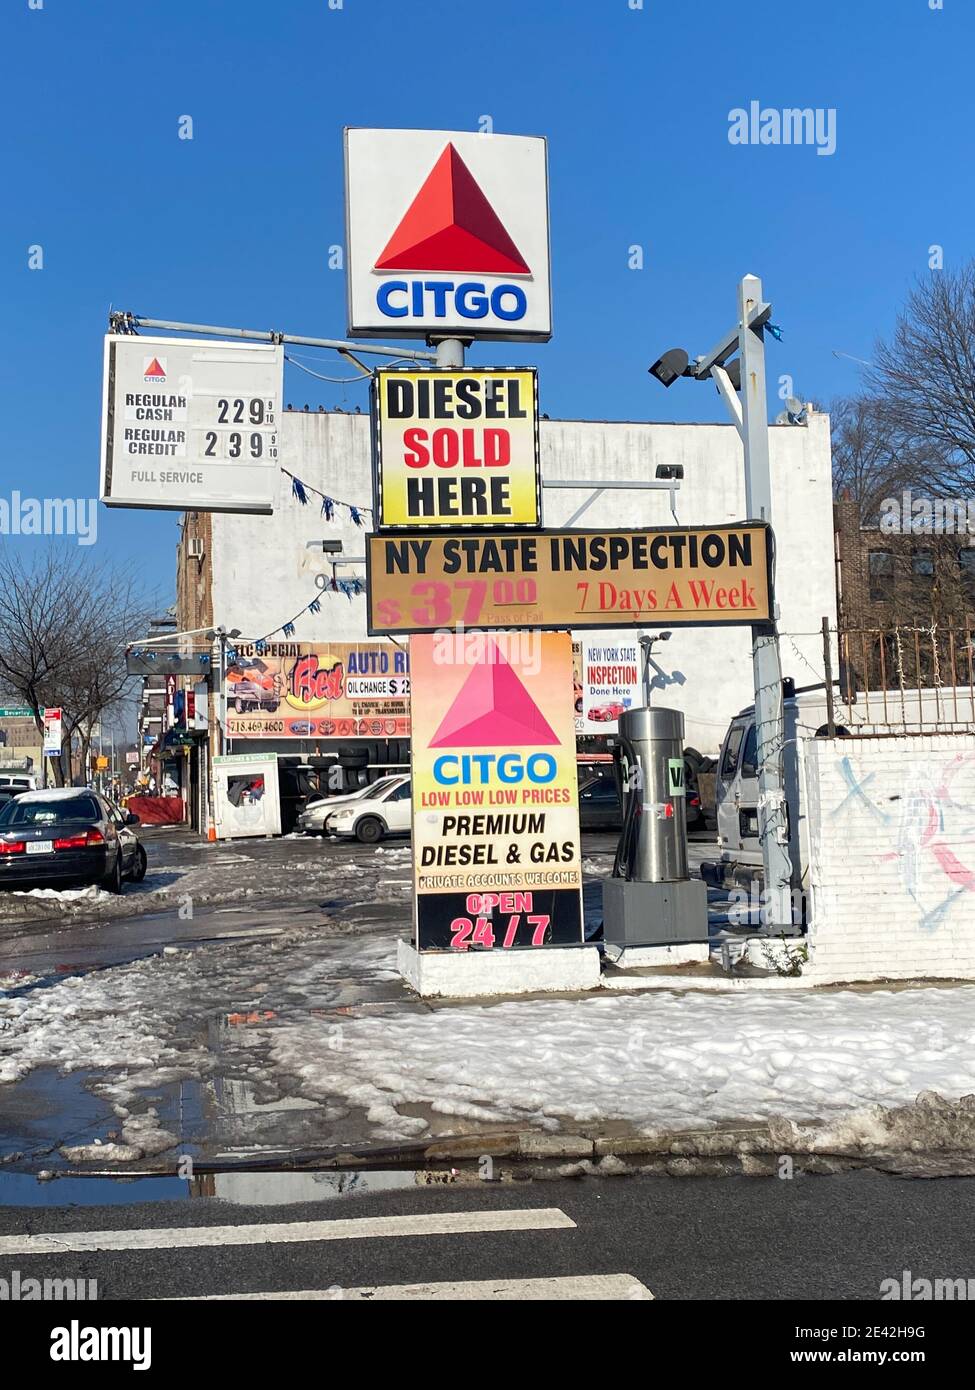 Citgo gas station along Coney Island Avenue in Brooklyn New York. Stock Photo